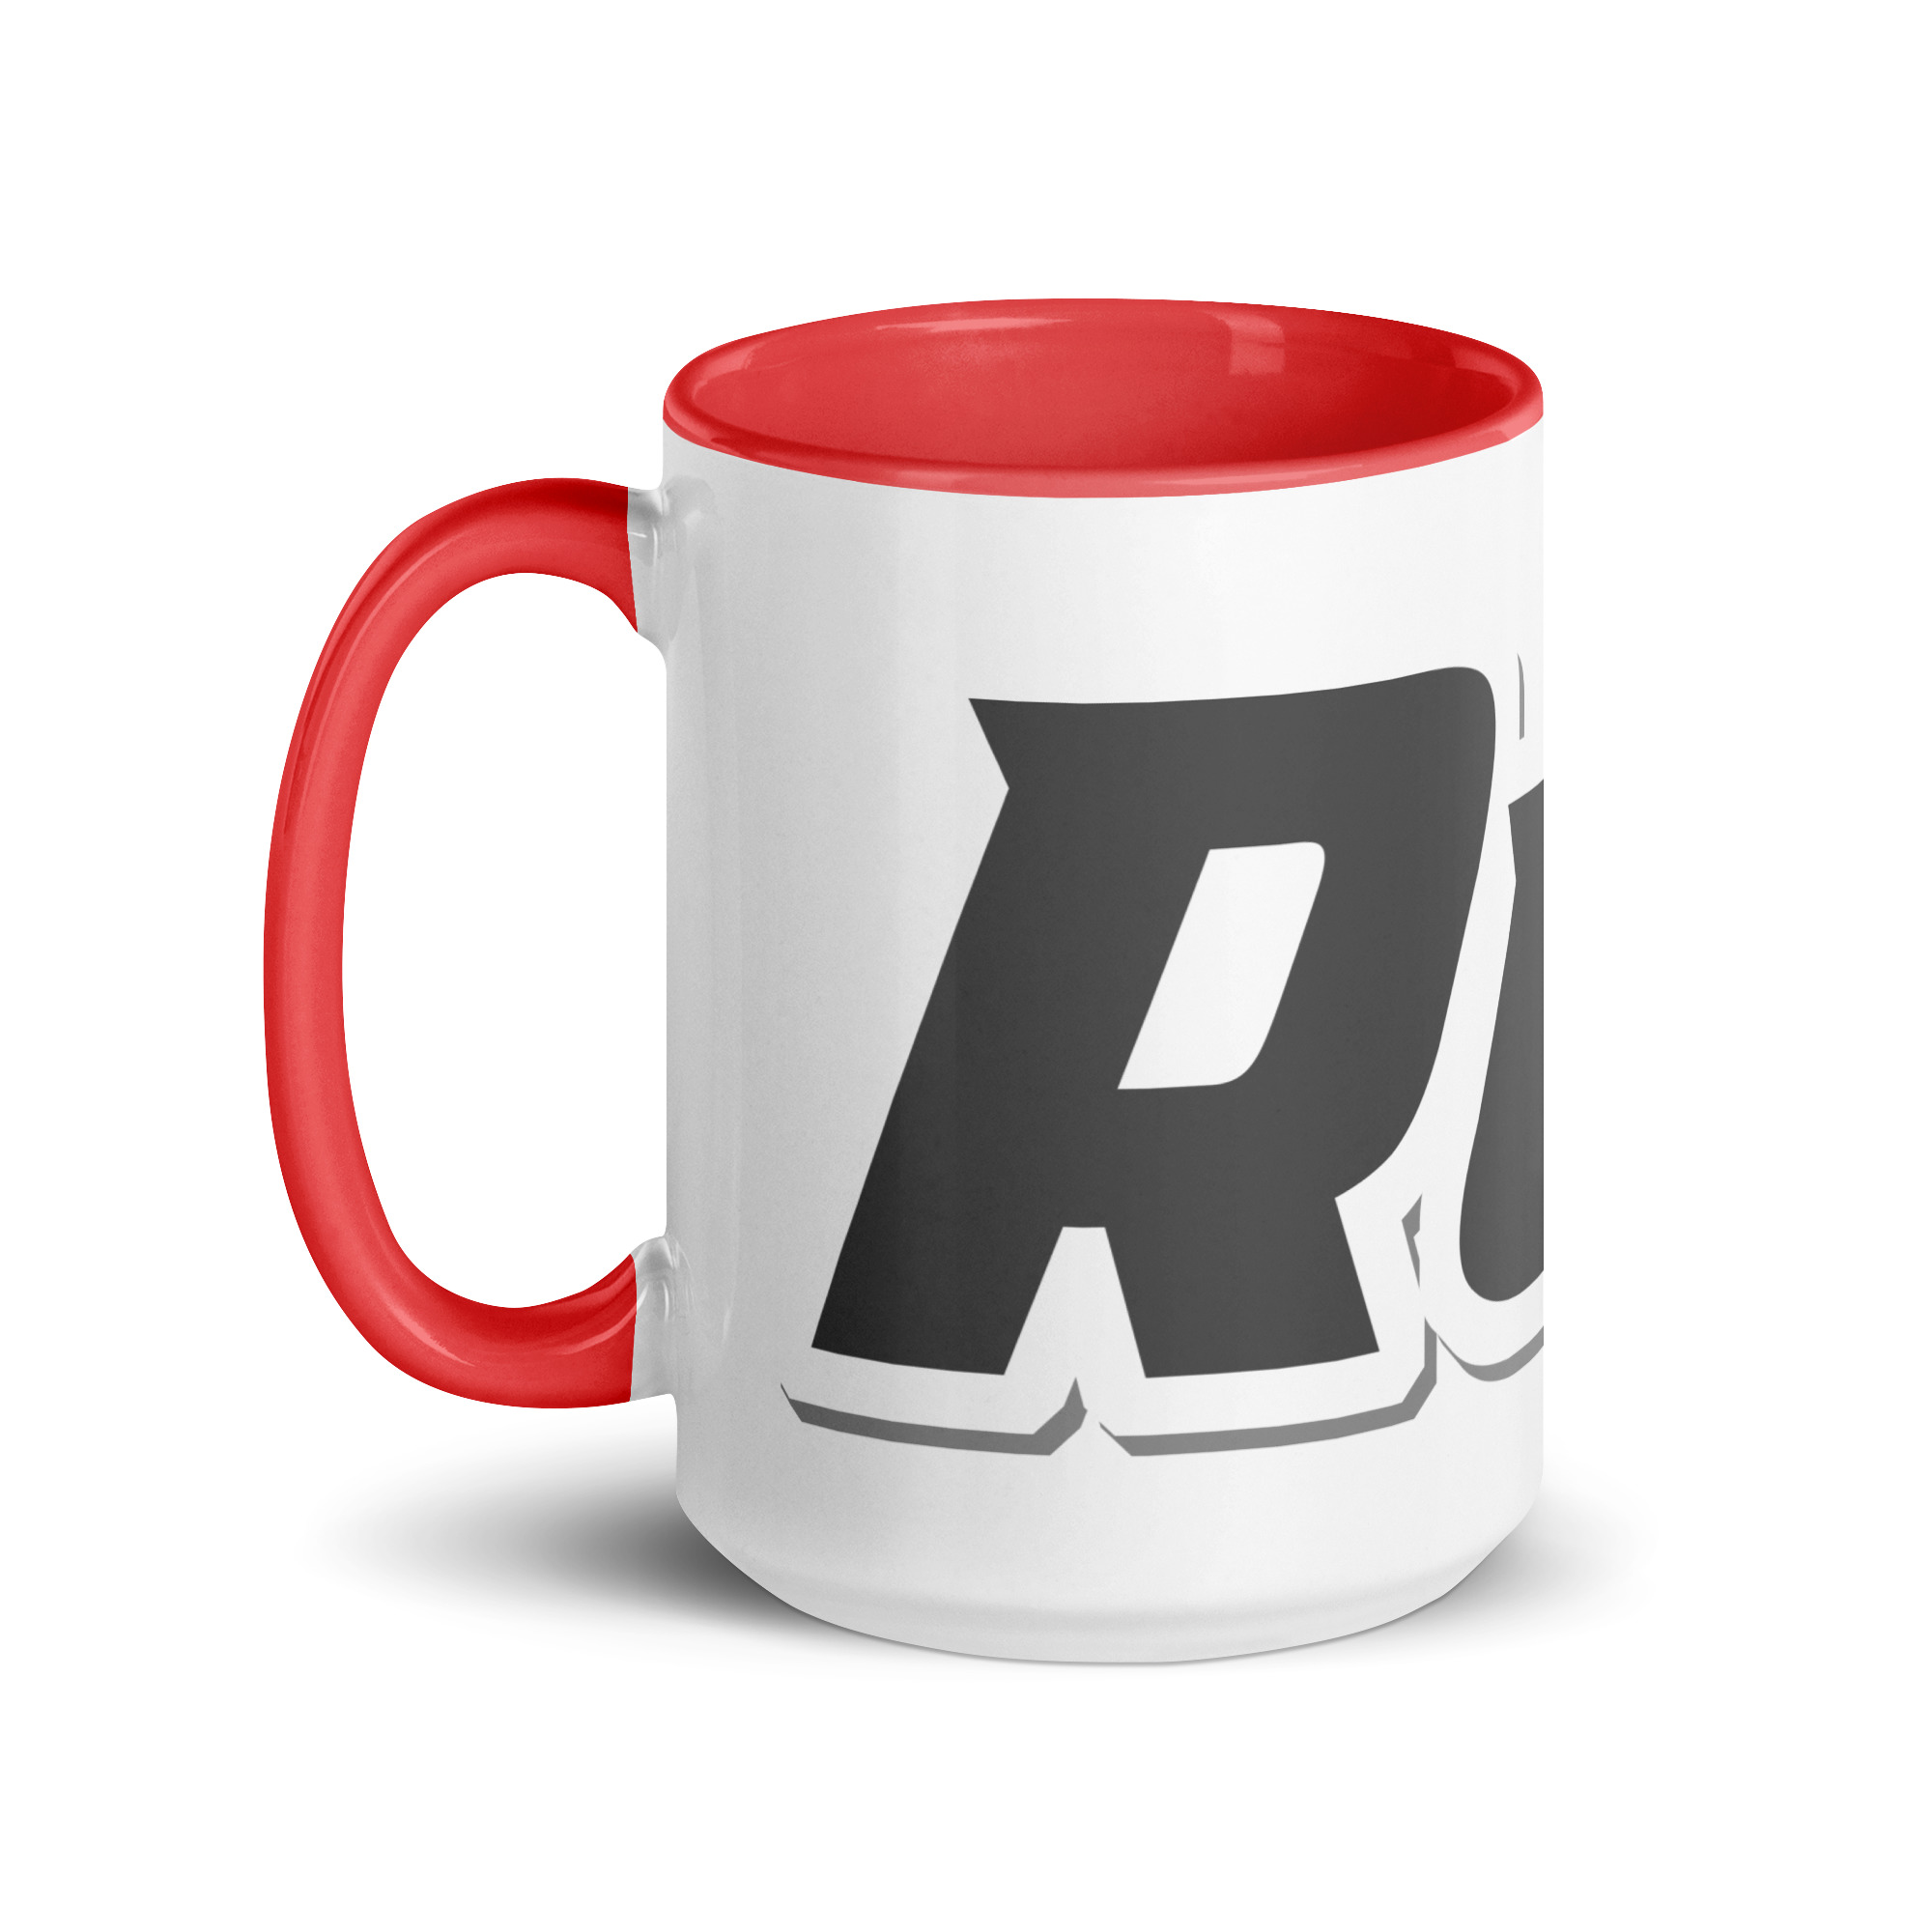 white-ceramic-mug-with-color-inside-red-15-oz-left-6525b50608c6d.jpg